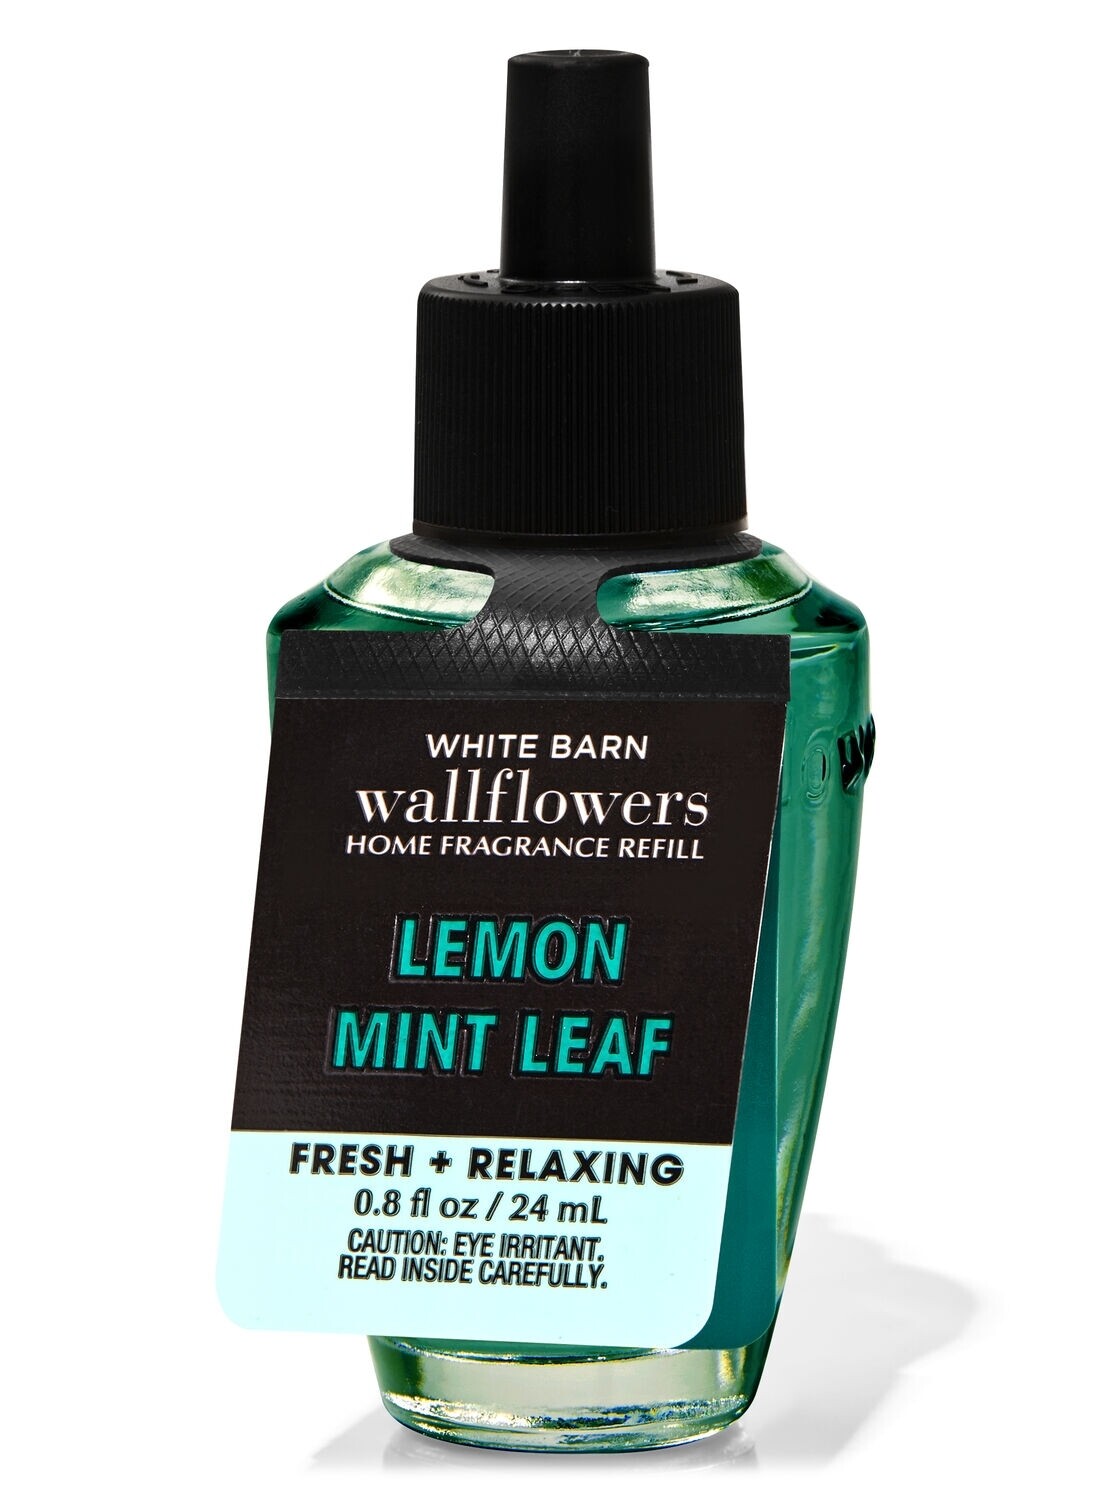 Bath and body works wallflower refill- lemon mint leaf